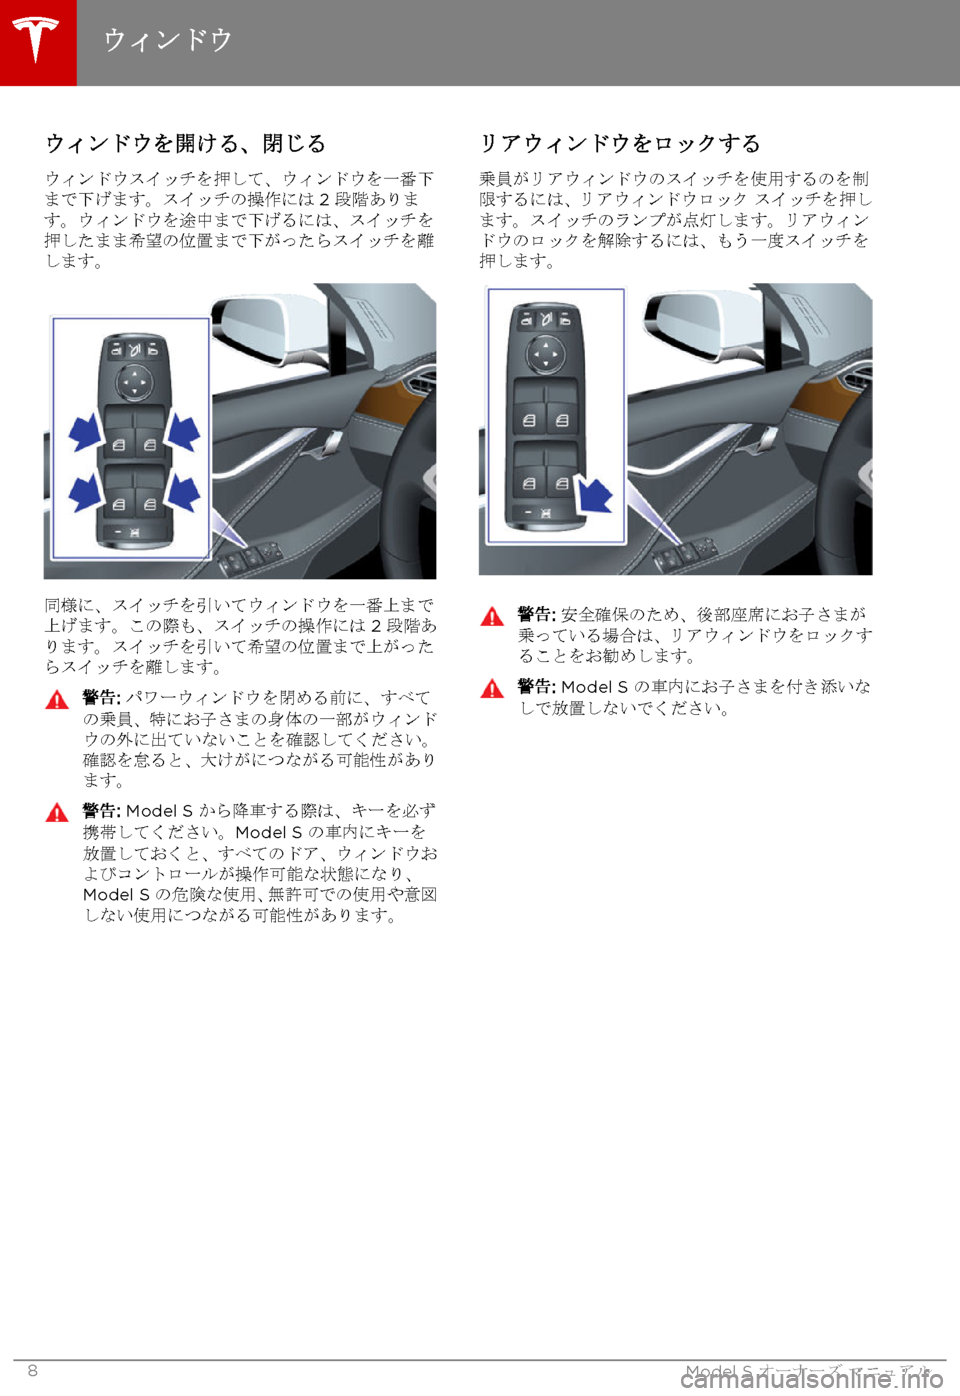 TESLA MODEL S 2015  取扱説明書 (in Japanese)  ウィンドウを開ける、閉じる
ウィンドウスイッチを押して、ウィンドウを一番下まで下げます。スイッチの操作には2 段階あります。ウィンドウを�